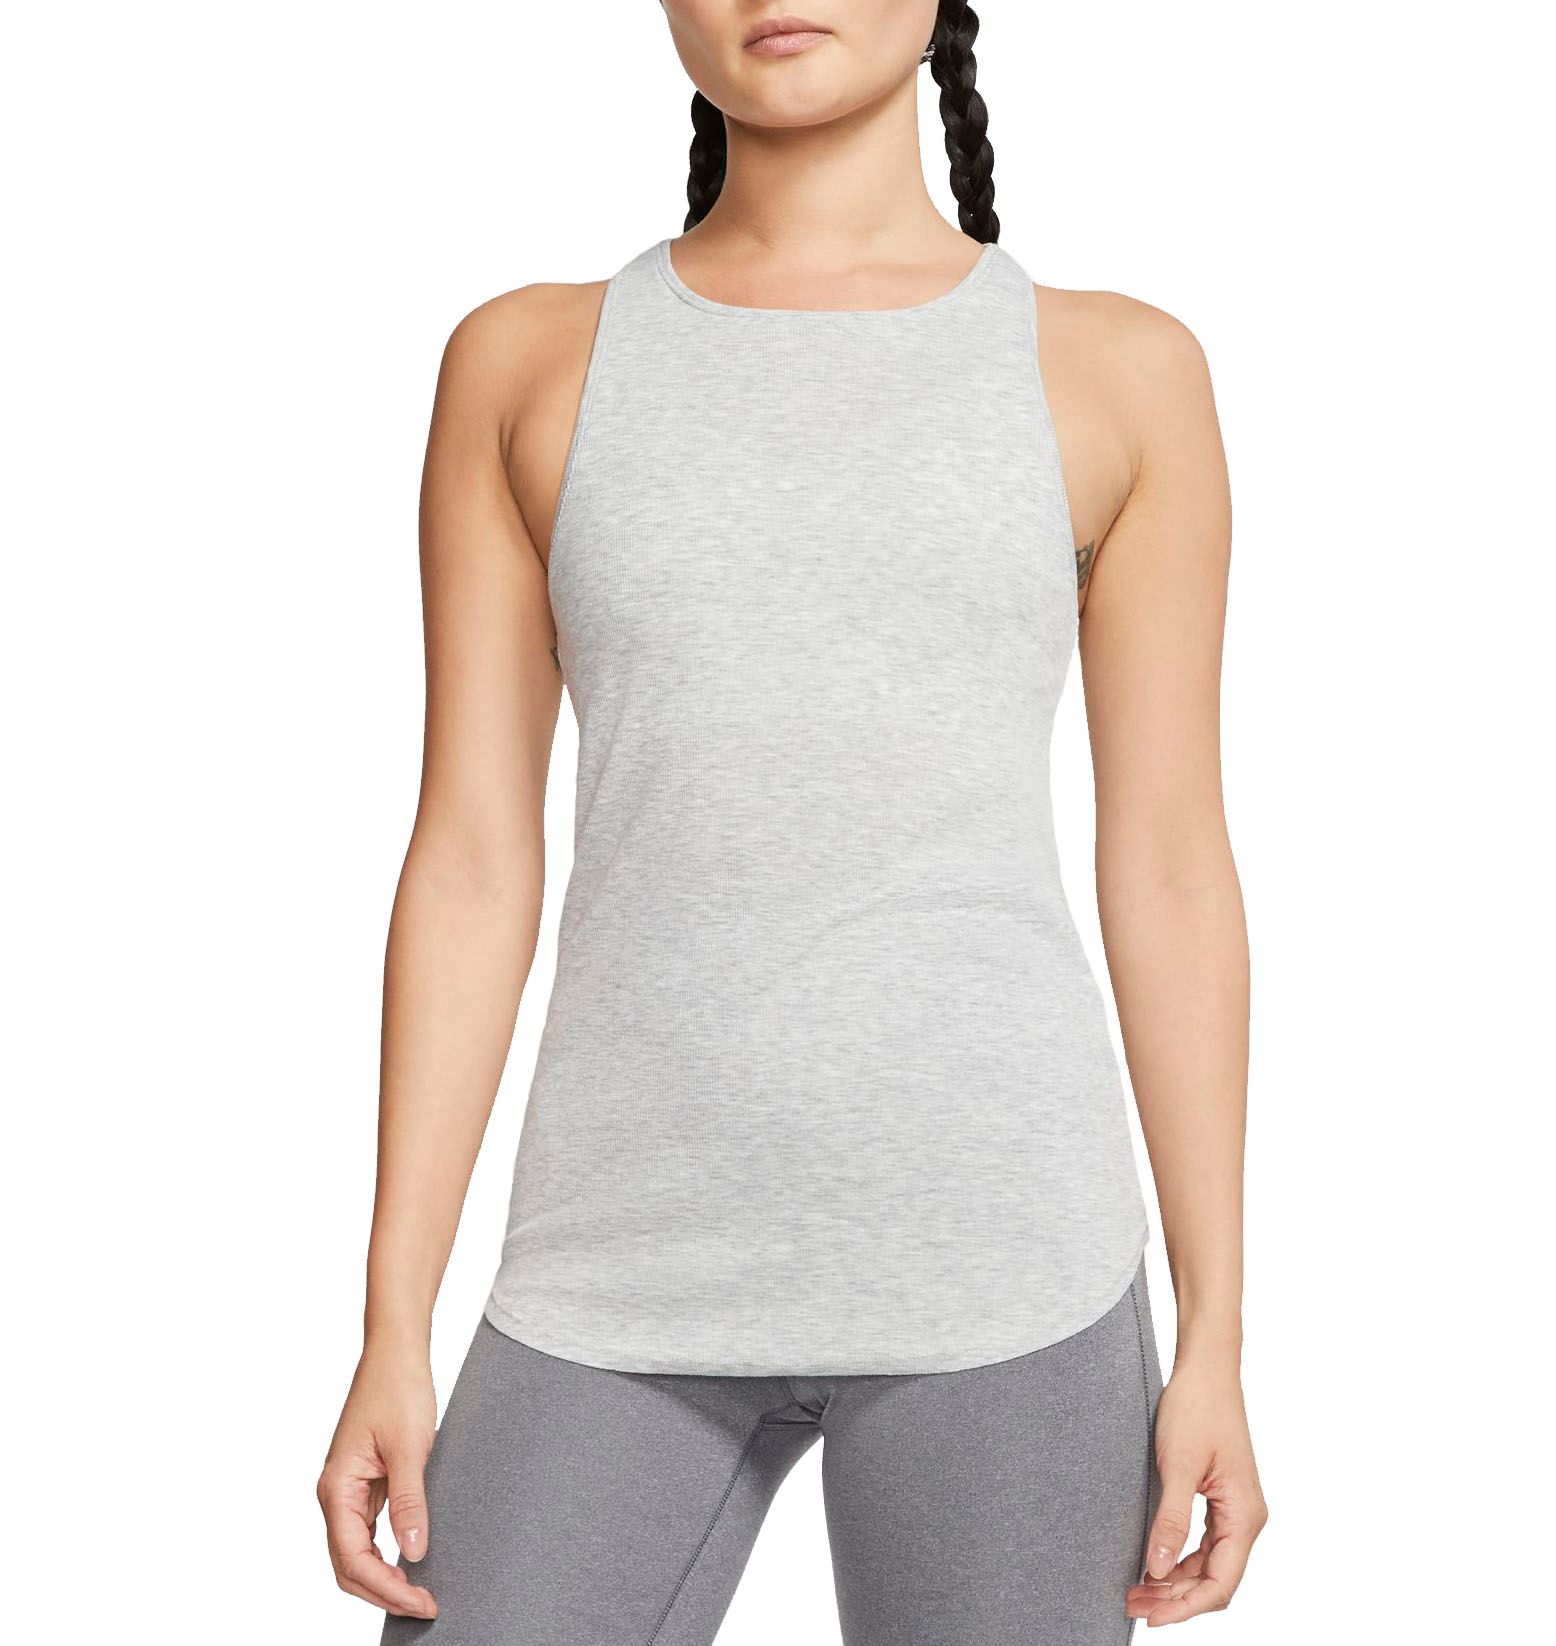 grey yoga top